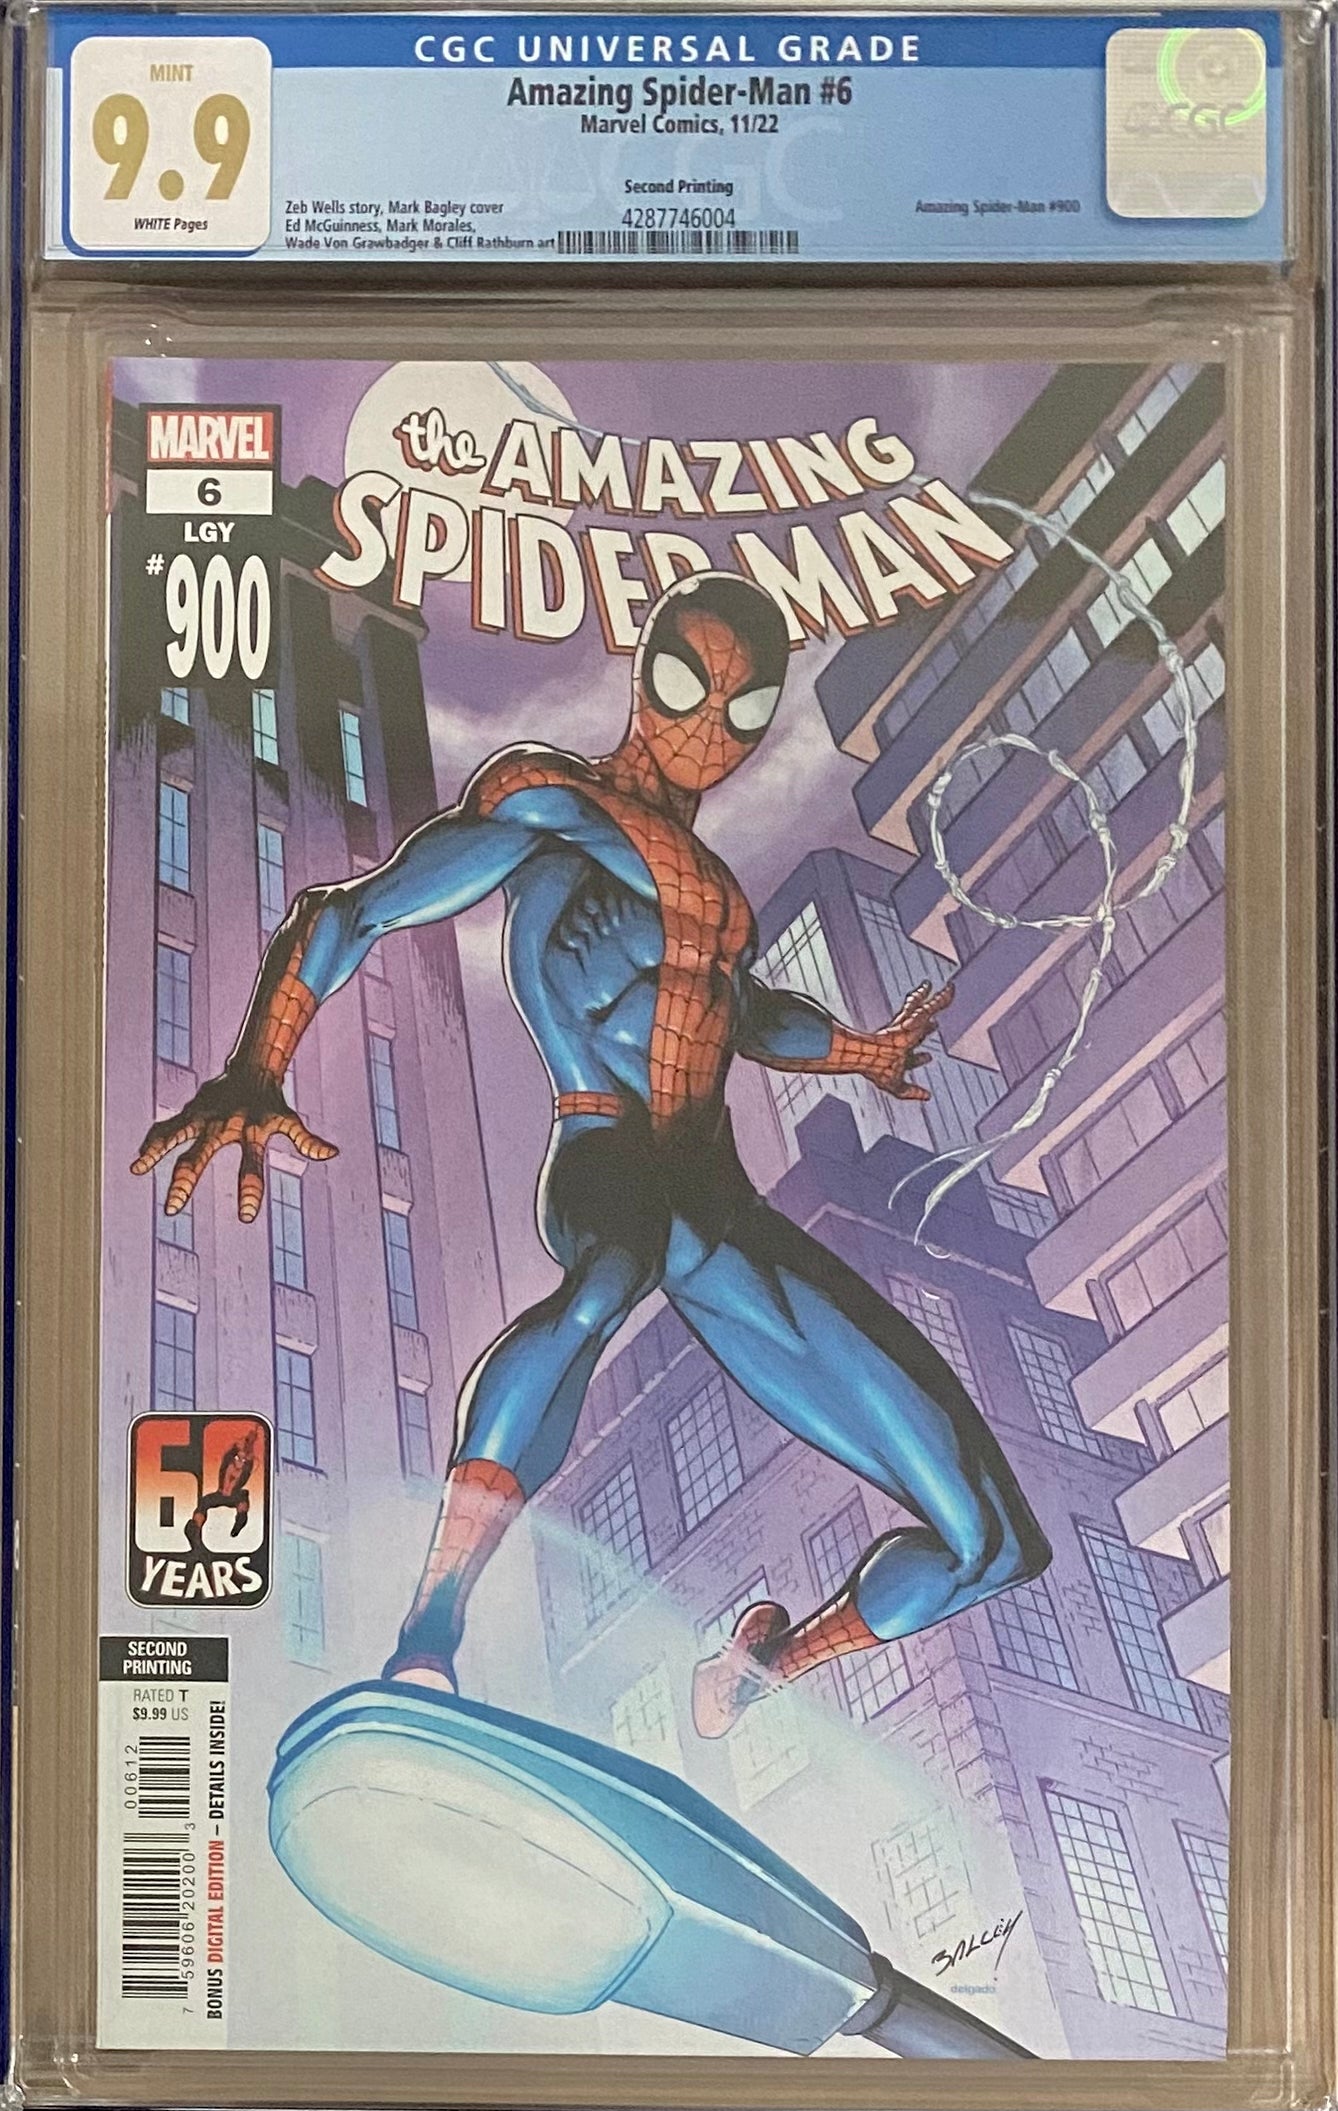 Amazing Spider-Man #6 (#900) Second Printing CGC 9.9